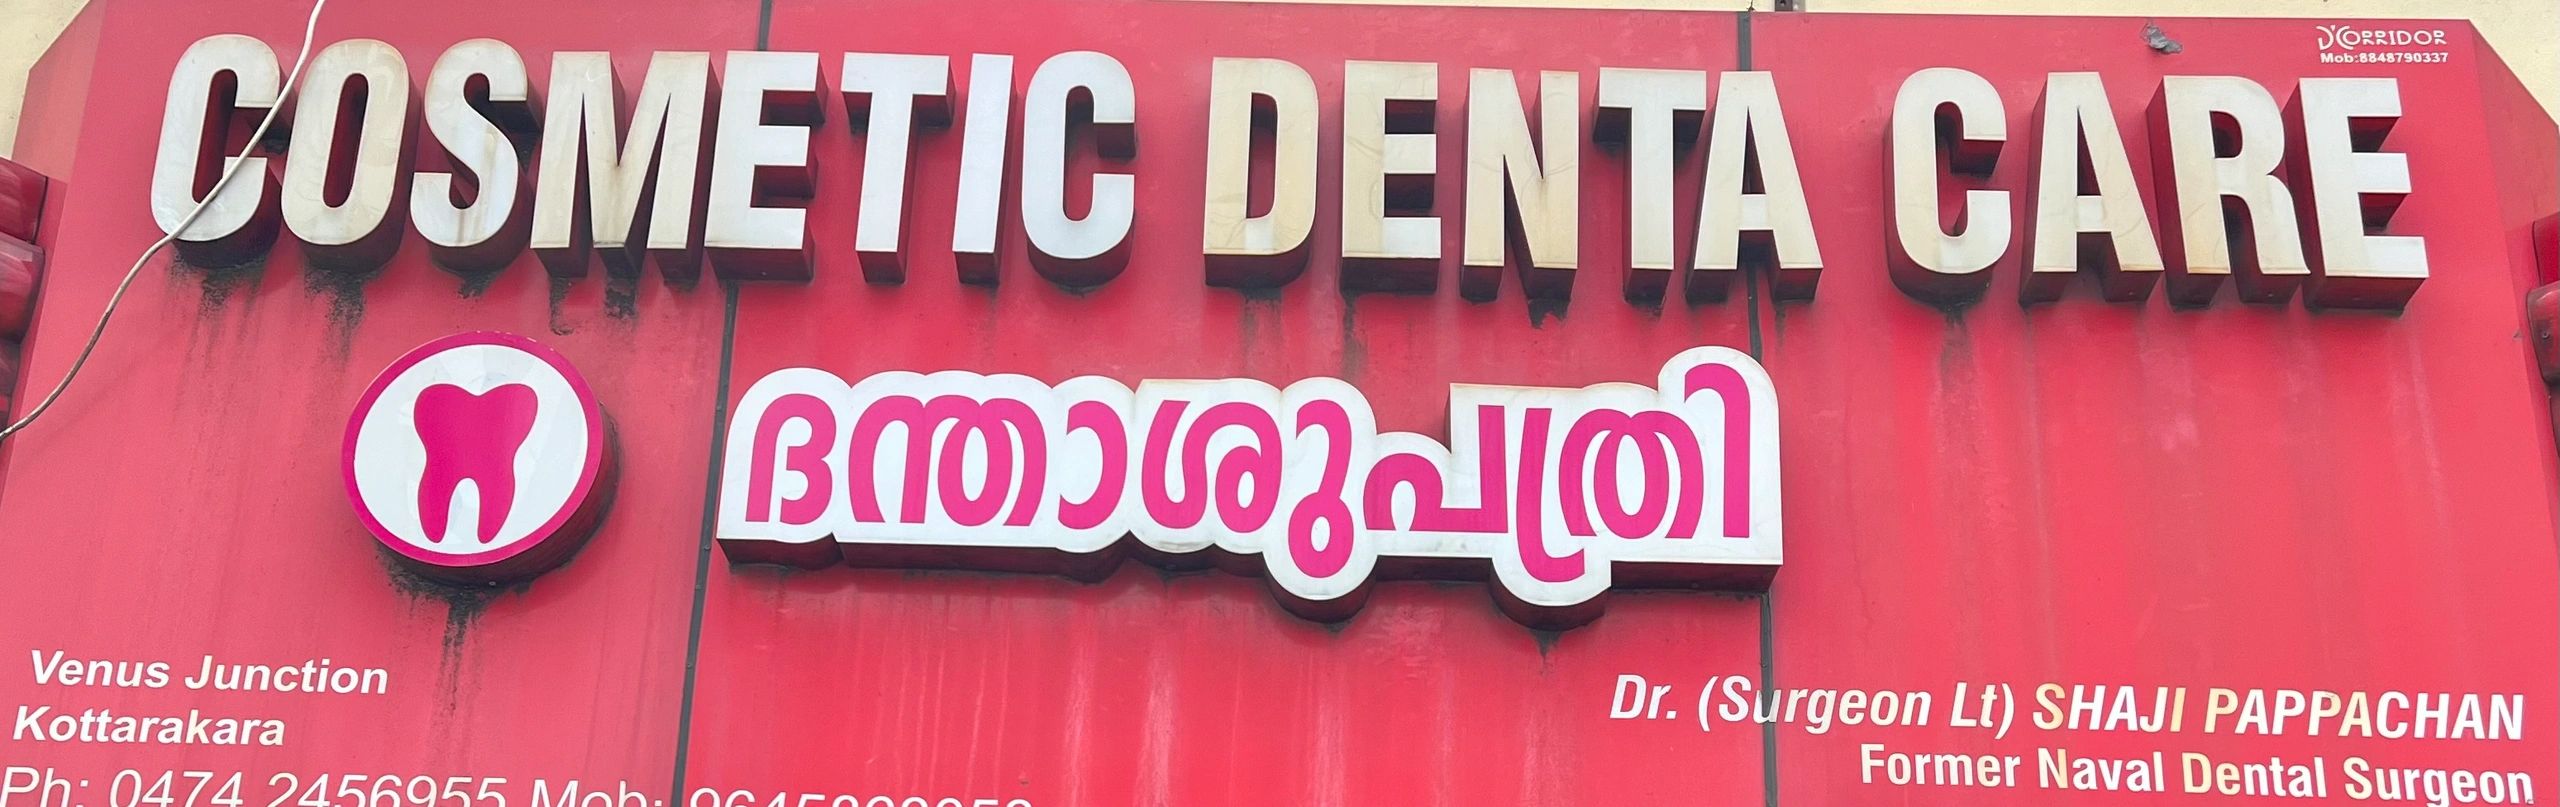 Cosmetic Denta Care 